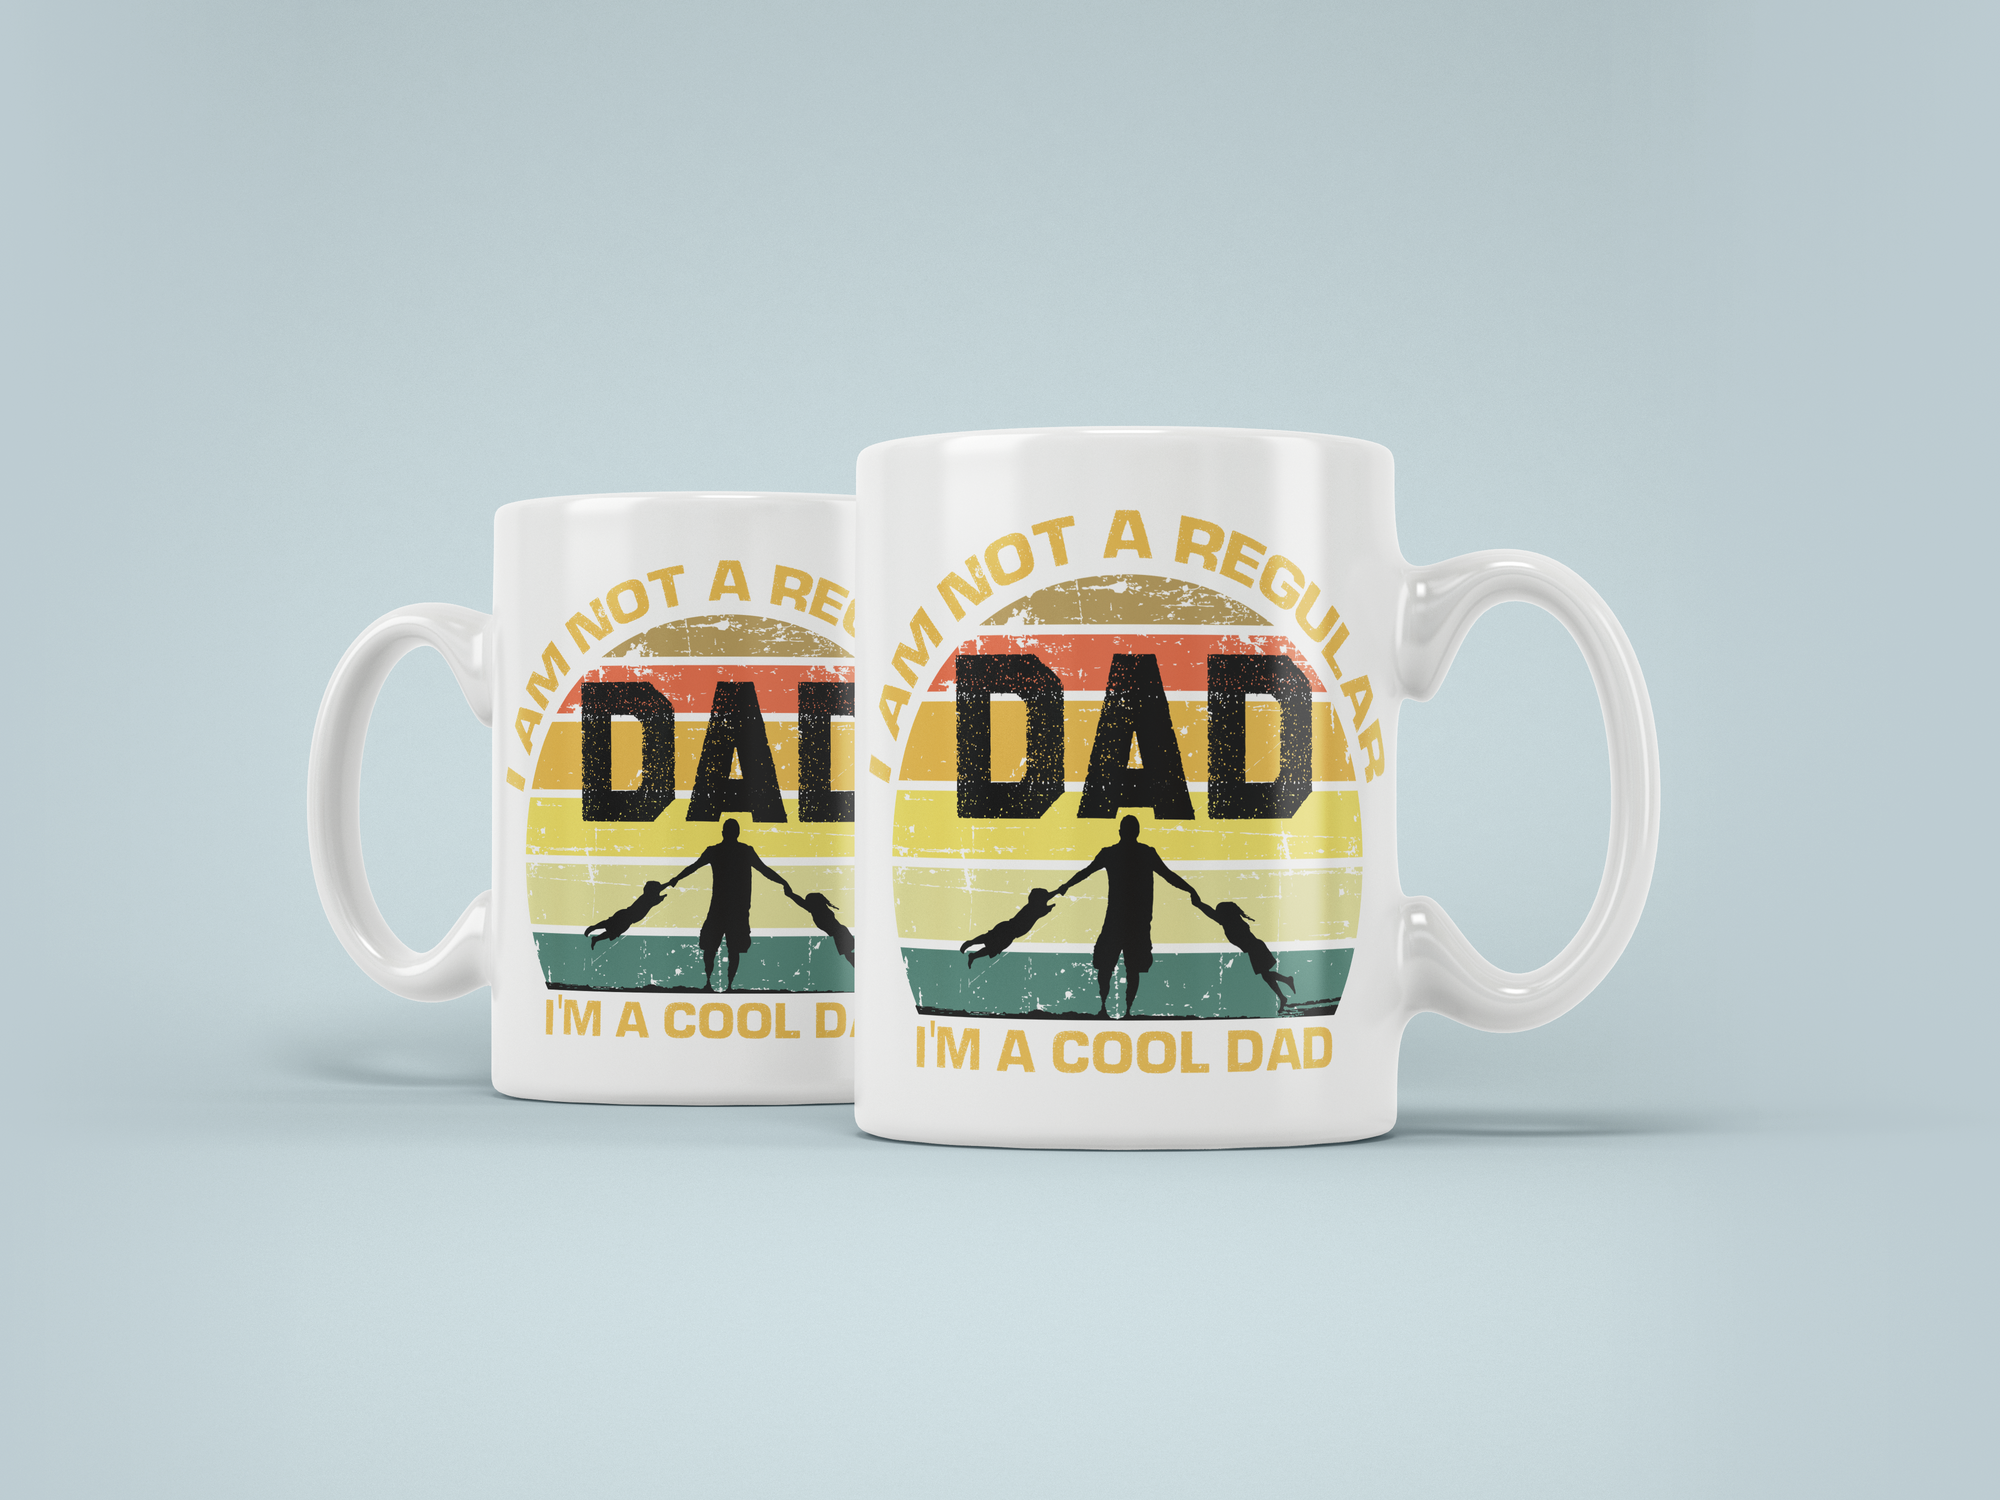 I'm not a regular dad - Fathers Day 11oz Mug